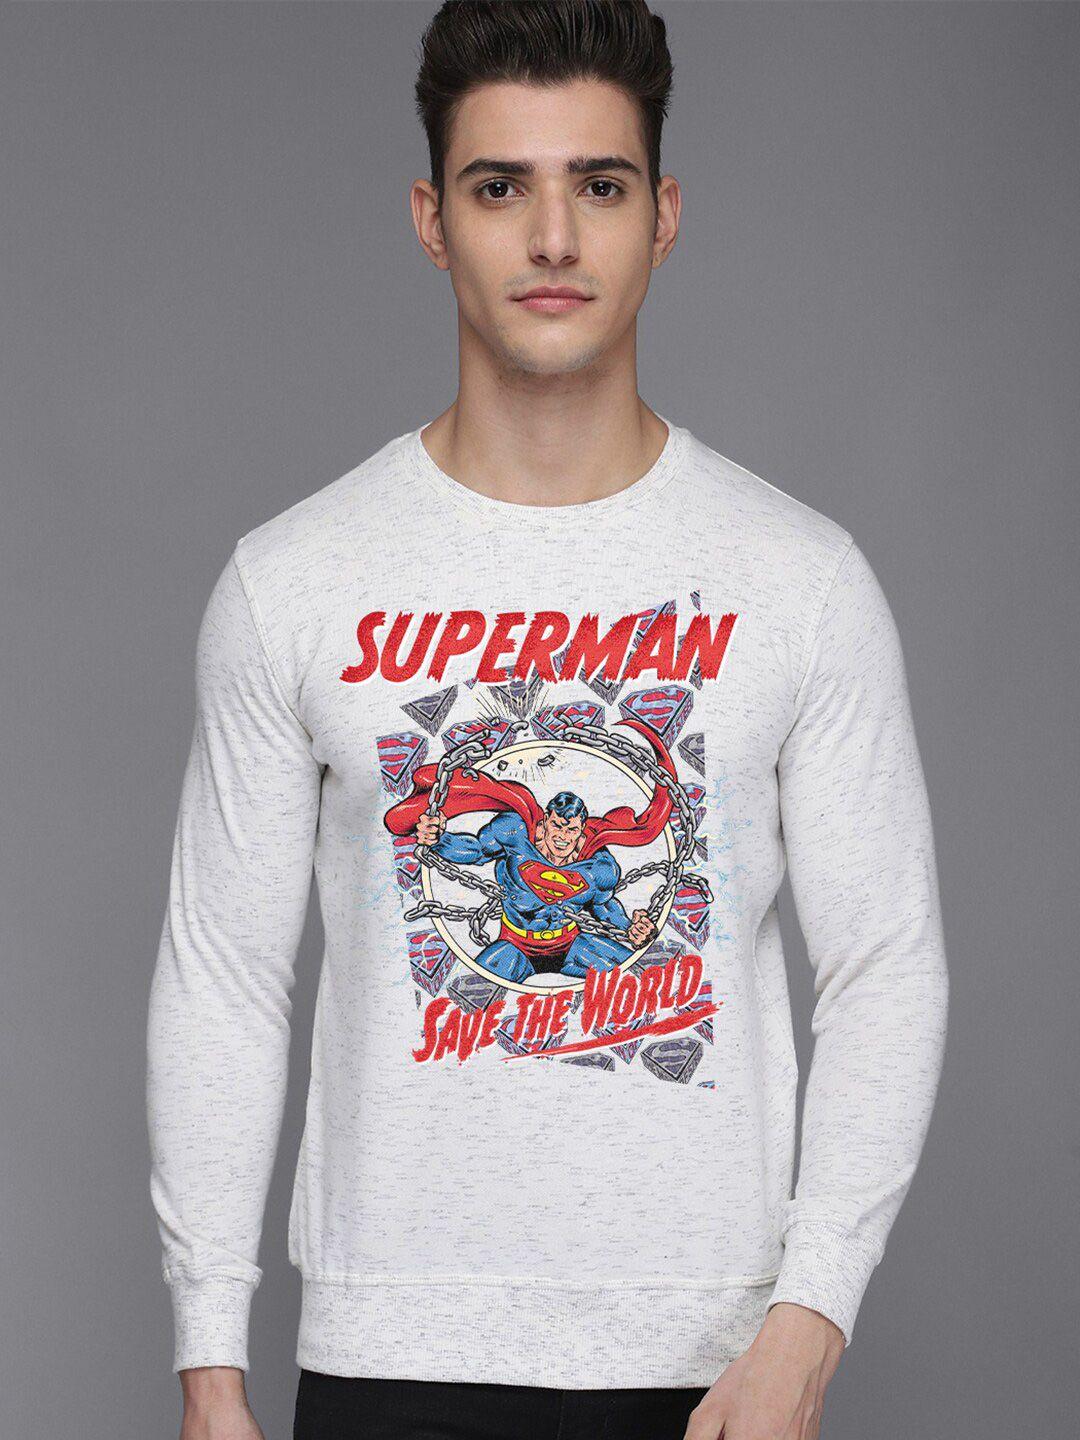 free authority men printed superman sweatshirts